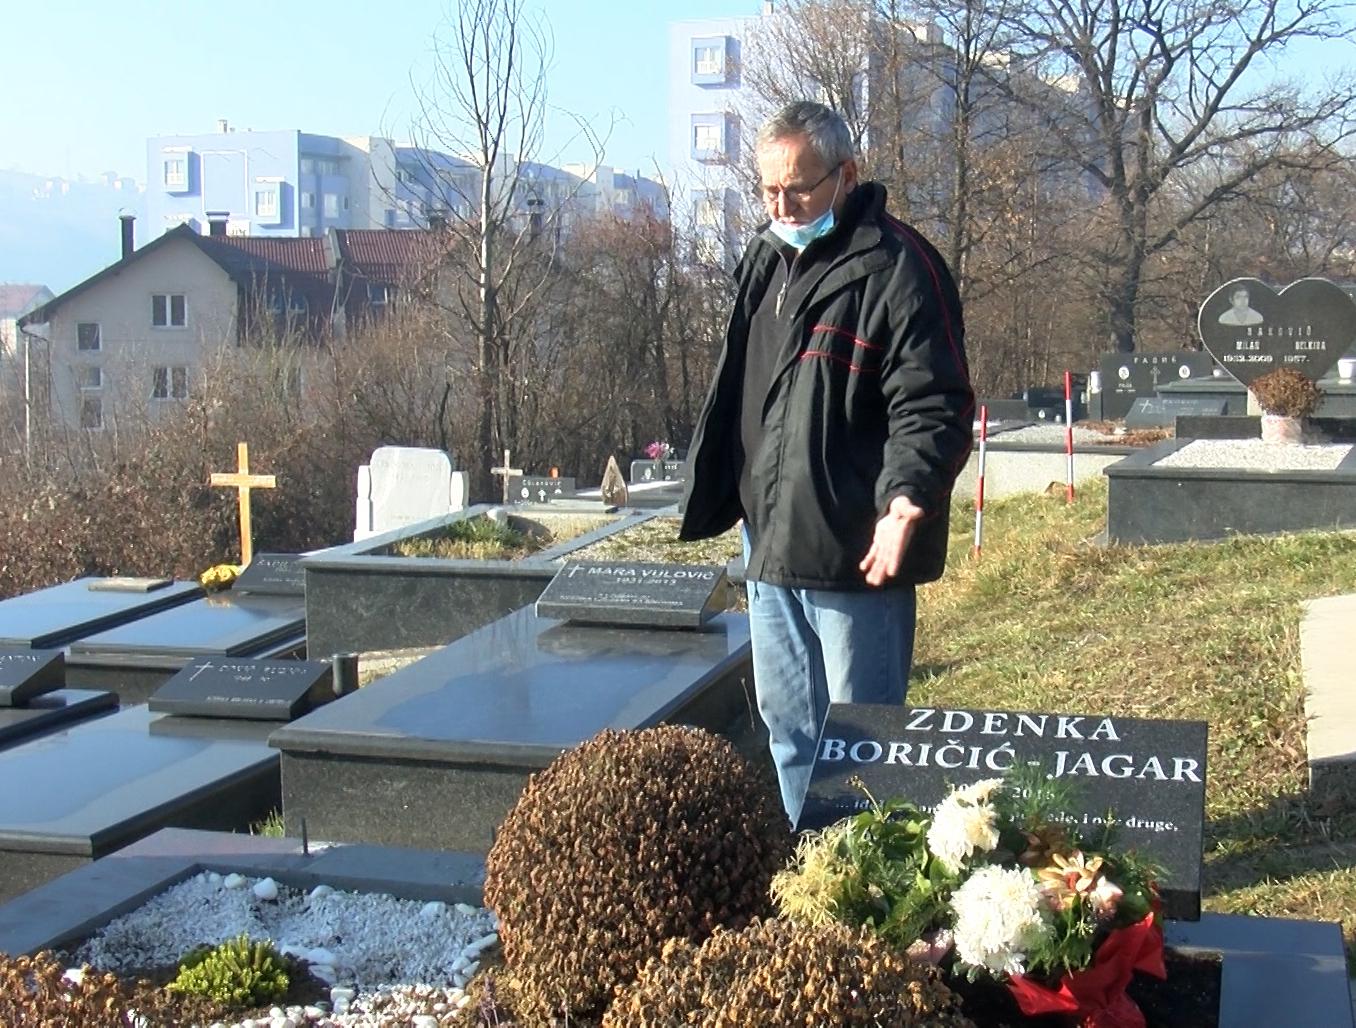 Jagar: Teško mi je palo saznanje da je oskrnavljen grob moje supruge - Avaz